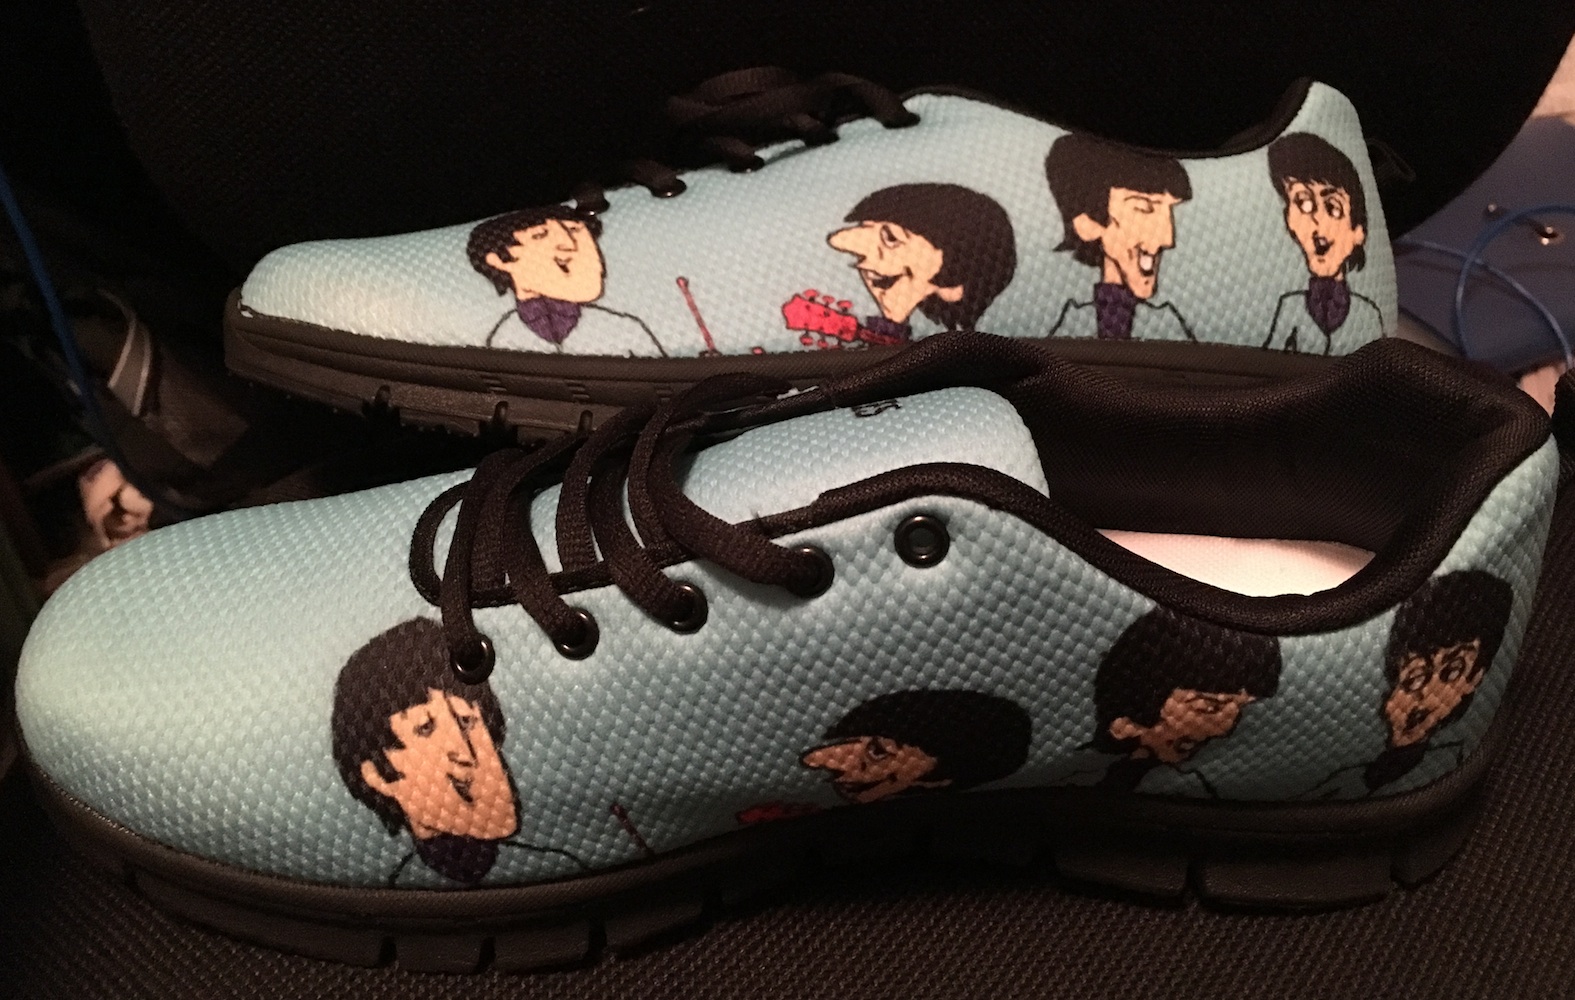 Beatles shoes